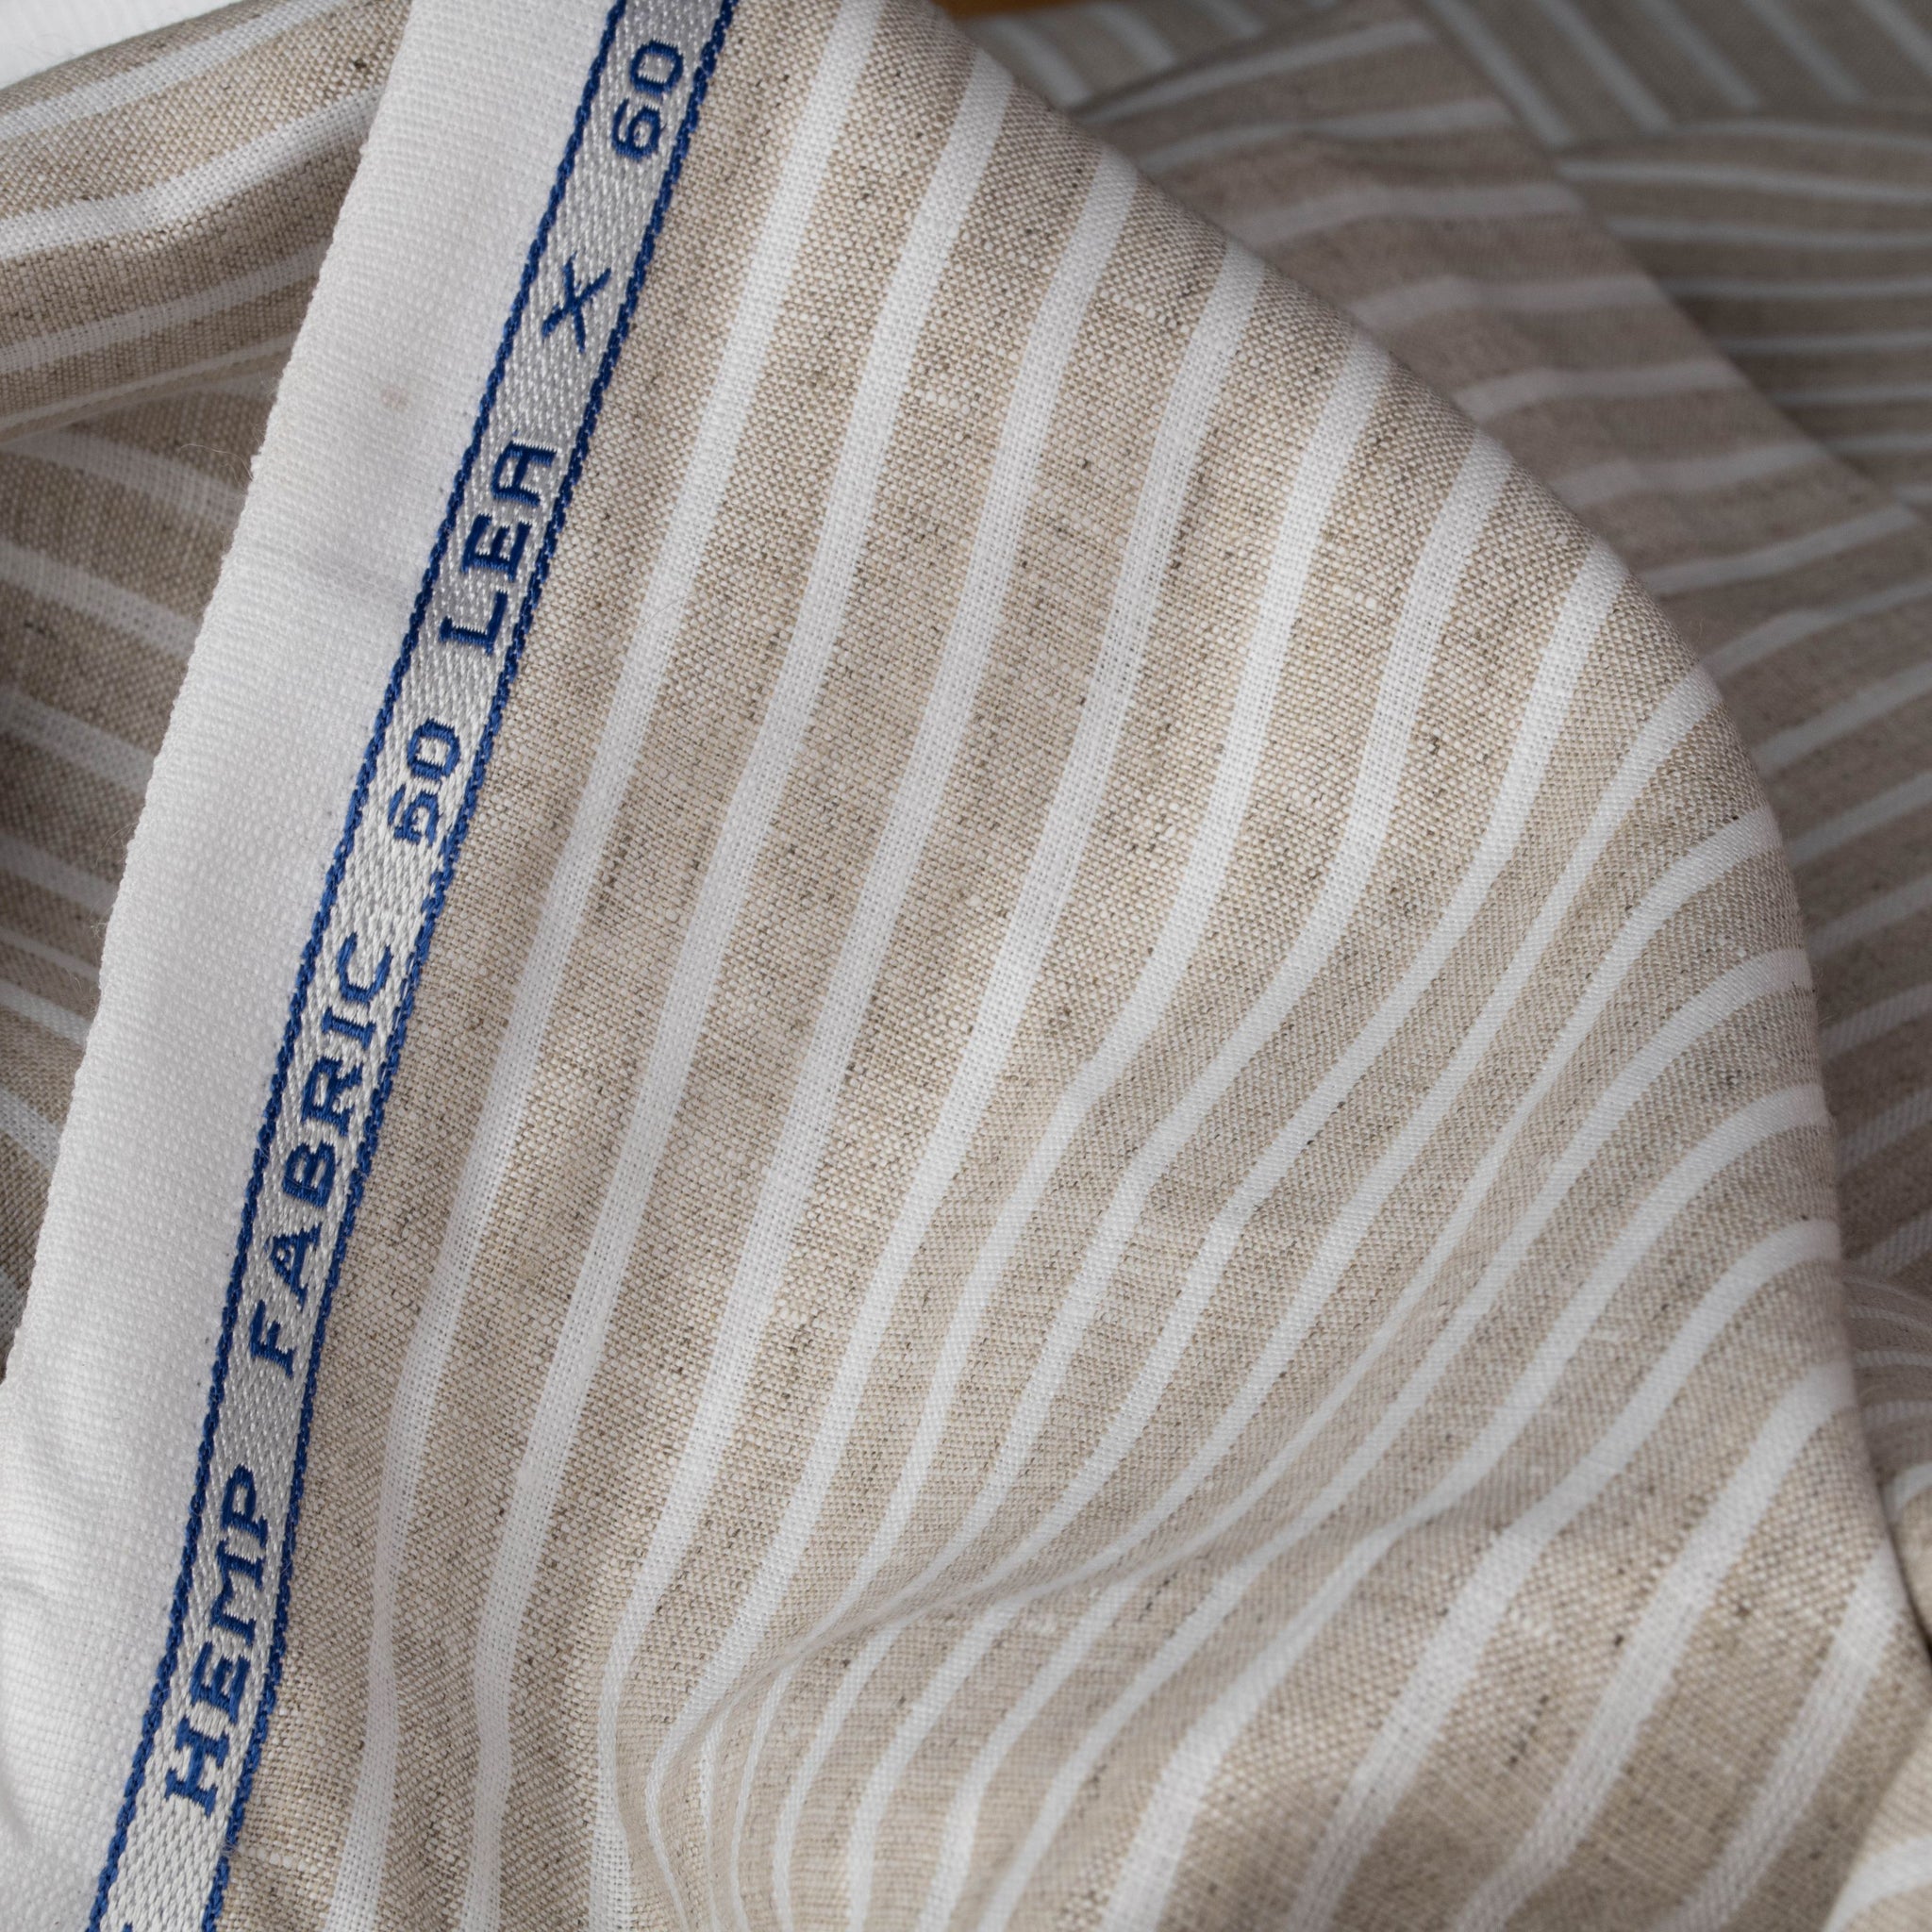 stripes fabric